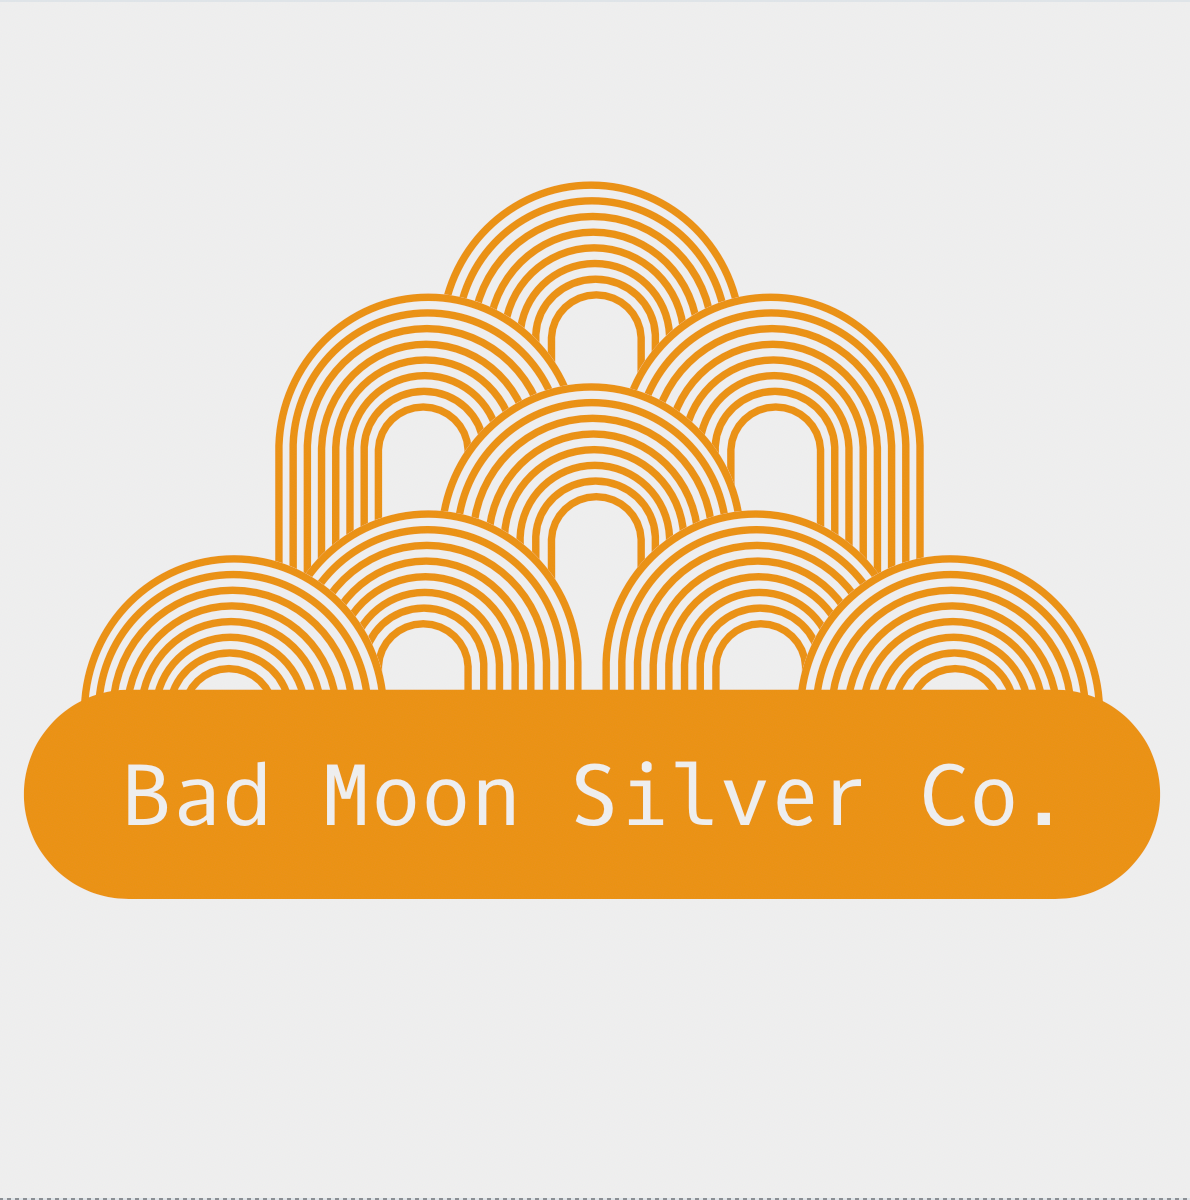 Bad Moon Silver Co.